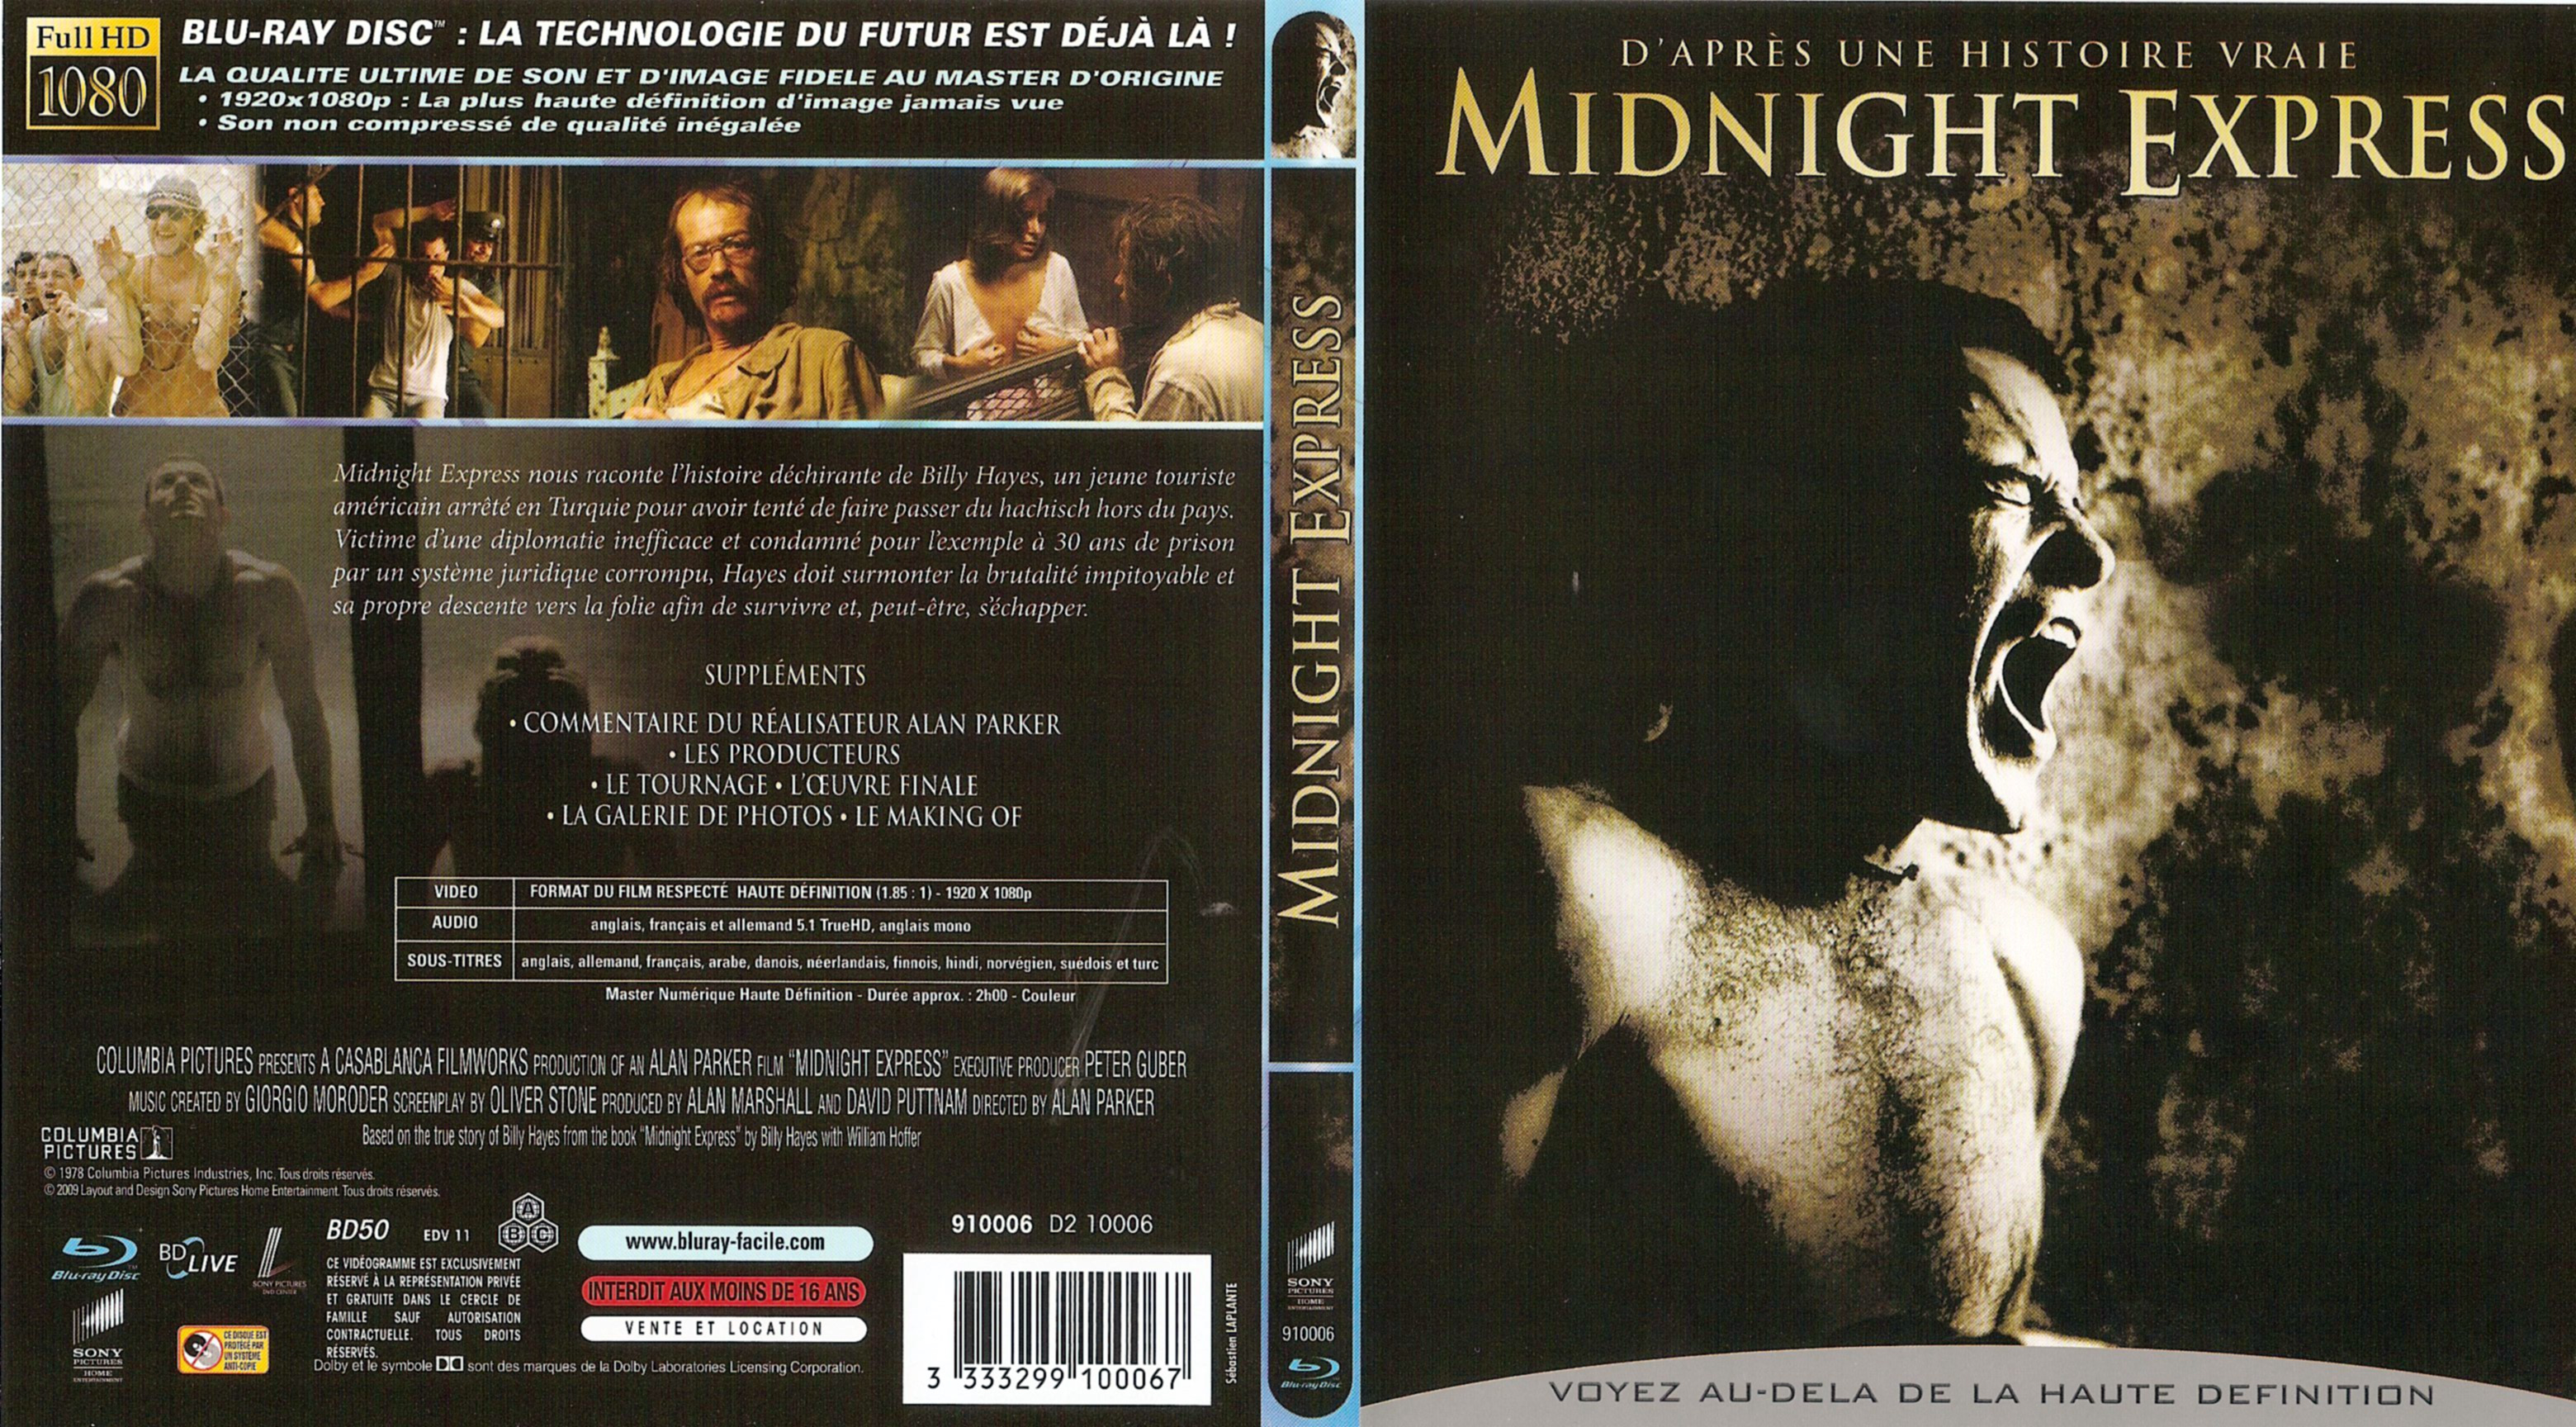 Jaquette DVD Midnight express (BLU-RAY)